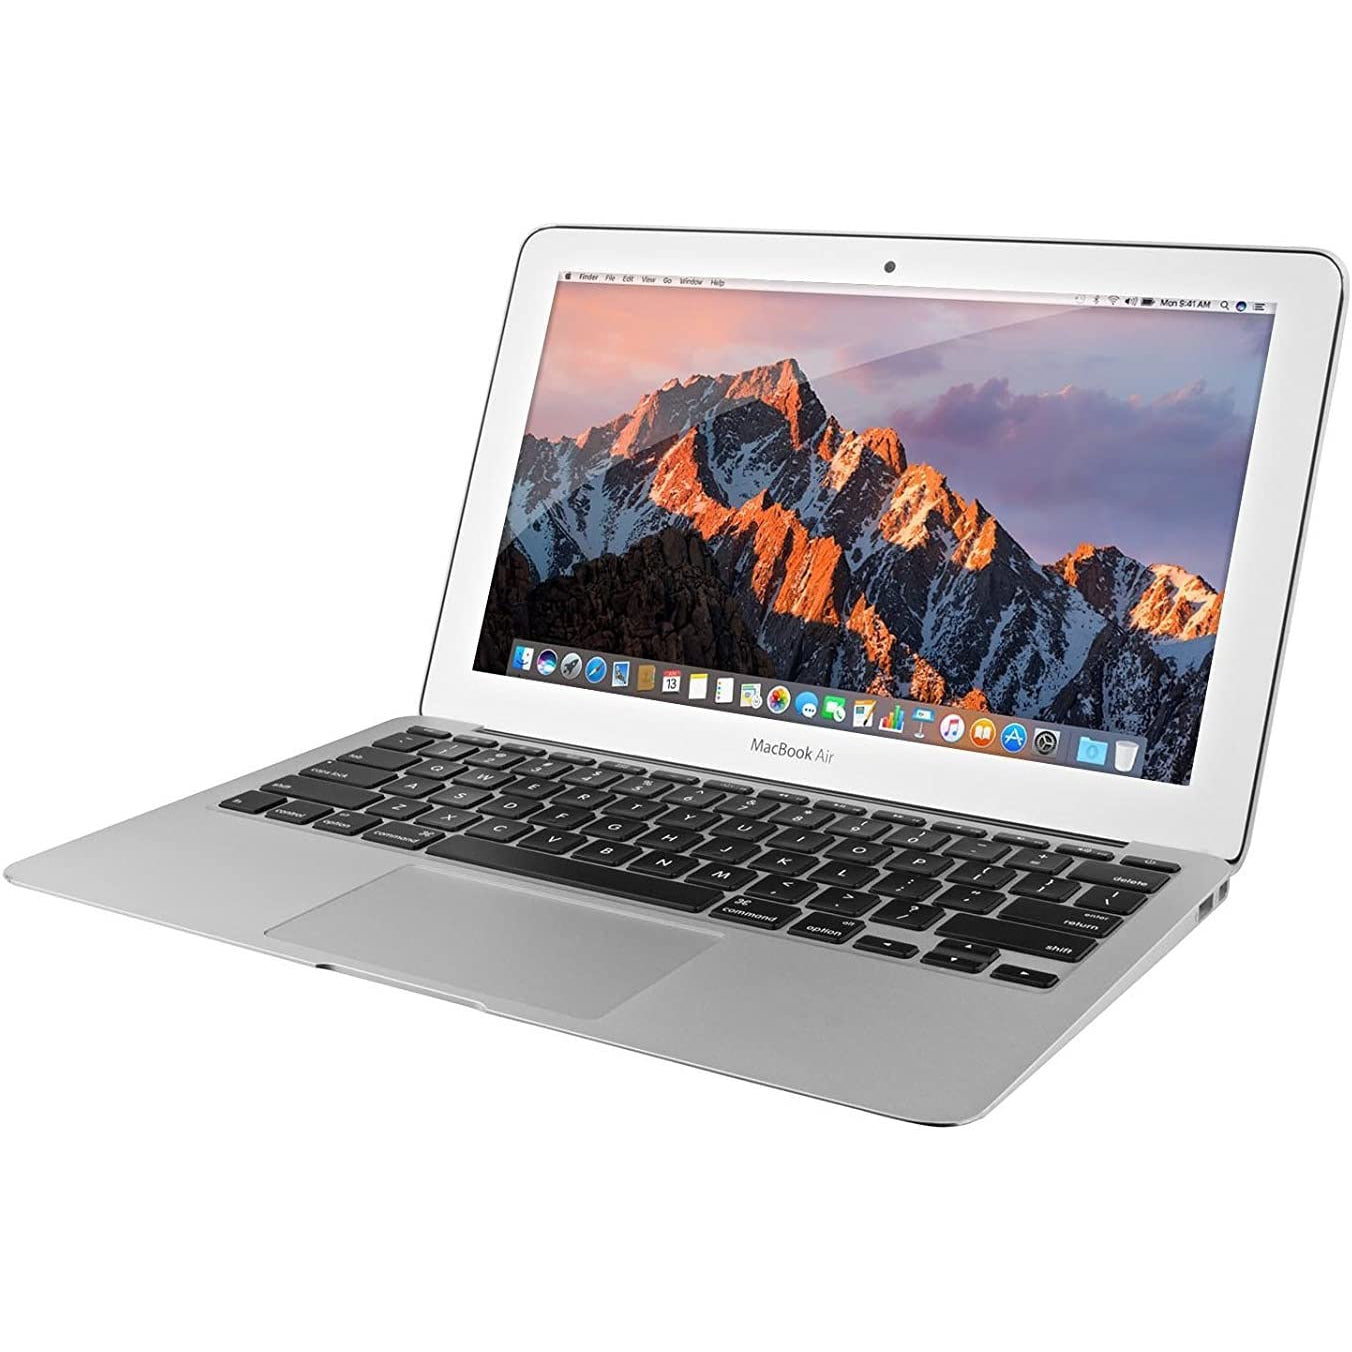 Apple MacBook Air 11.6'' MJVM2LL/A (2015) Laptop, Intel Core i5, 4GB RAM, 128GB, Silver - Refurbished Excellent